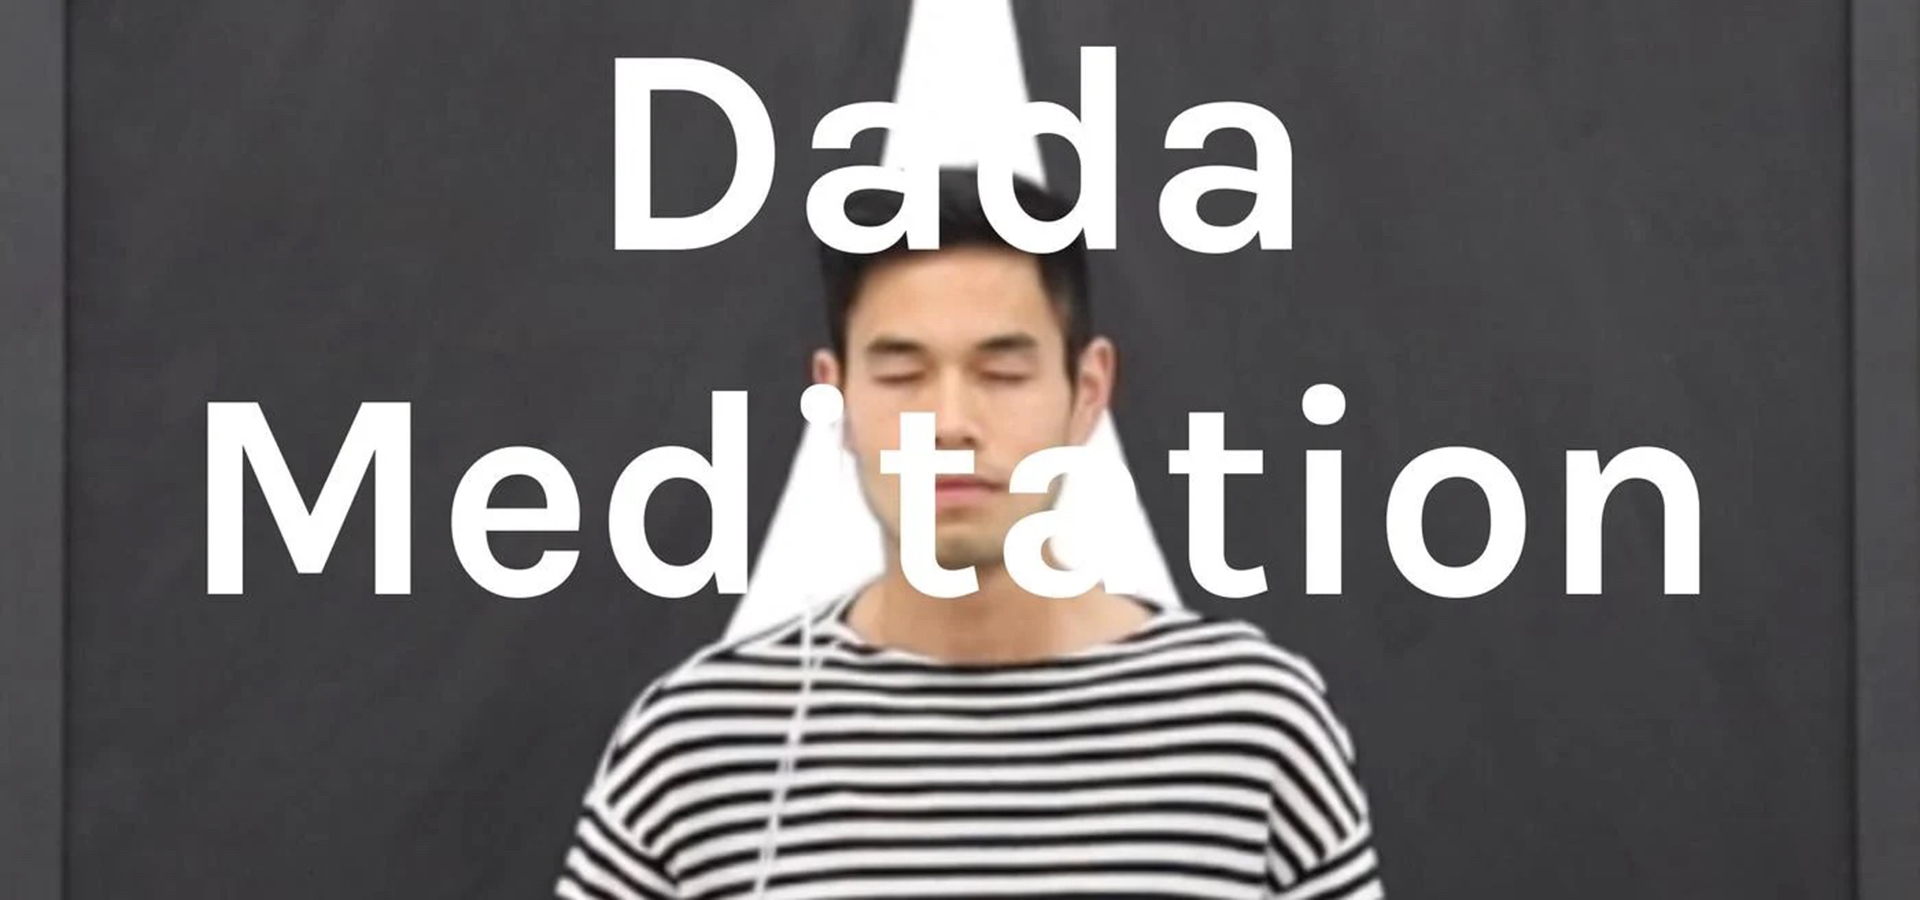 Dada Mediation written out over guy meditating